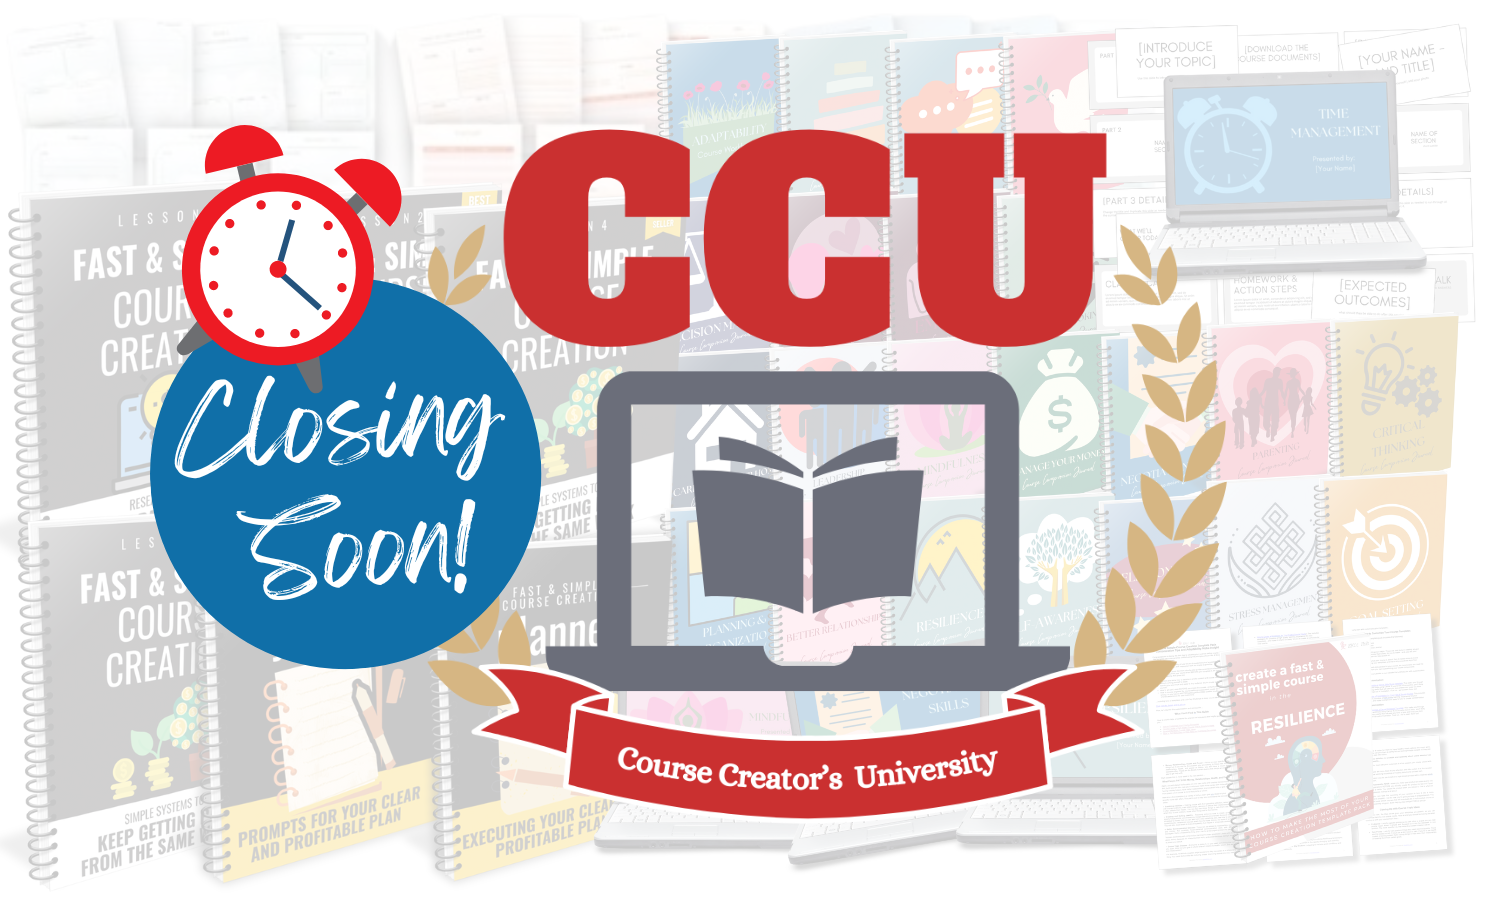 Course Creator's University Closes Soon!